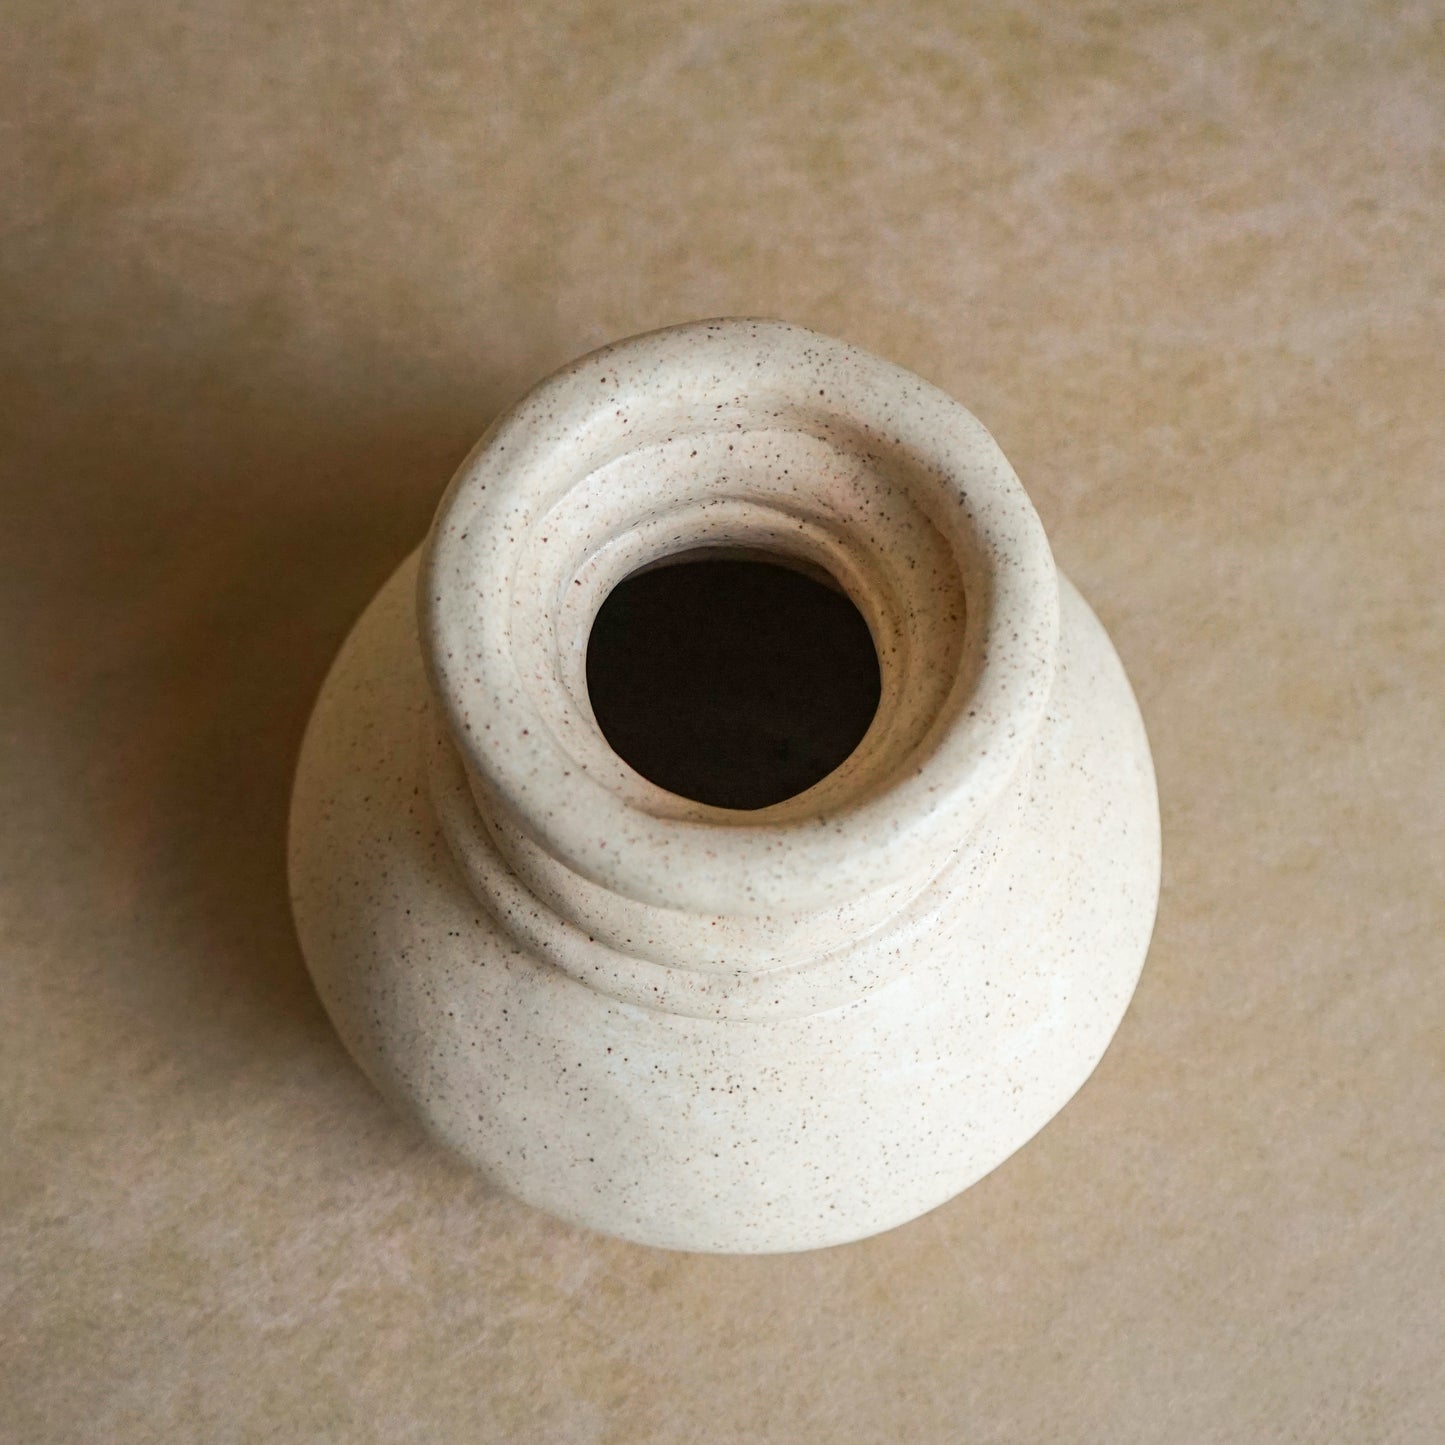 The Walnut Coil Vase